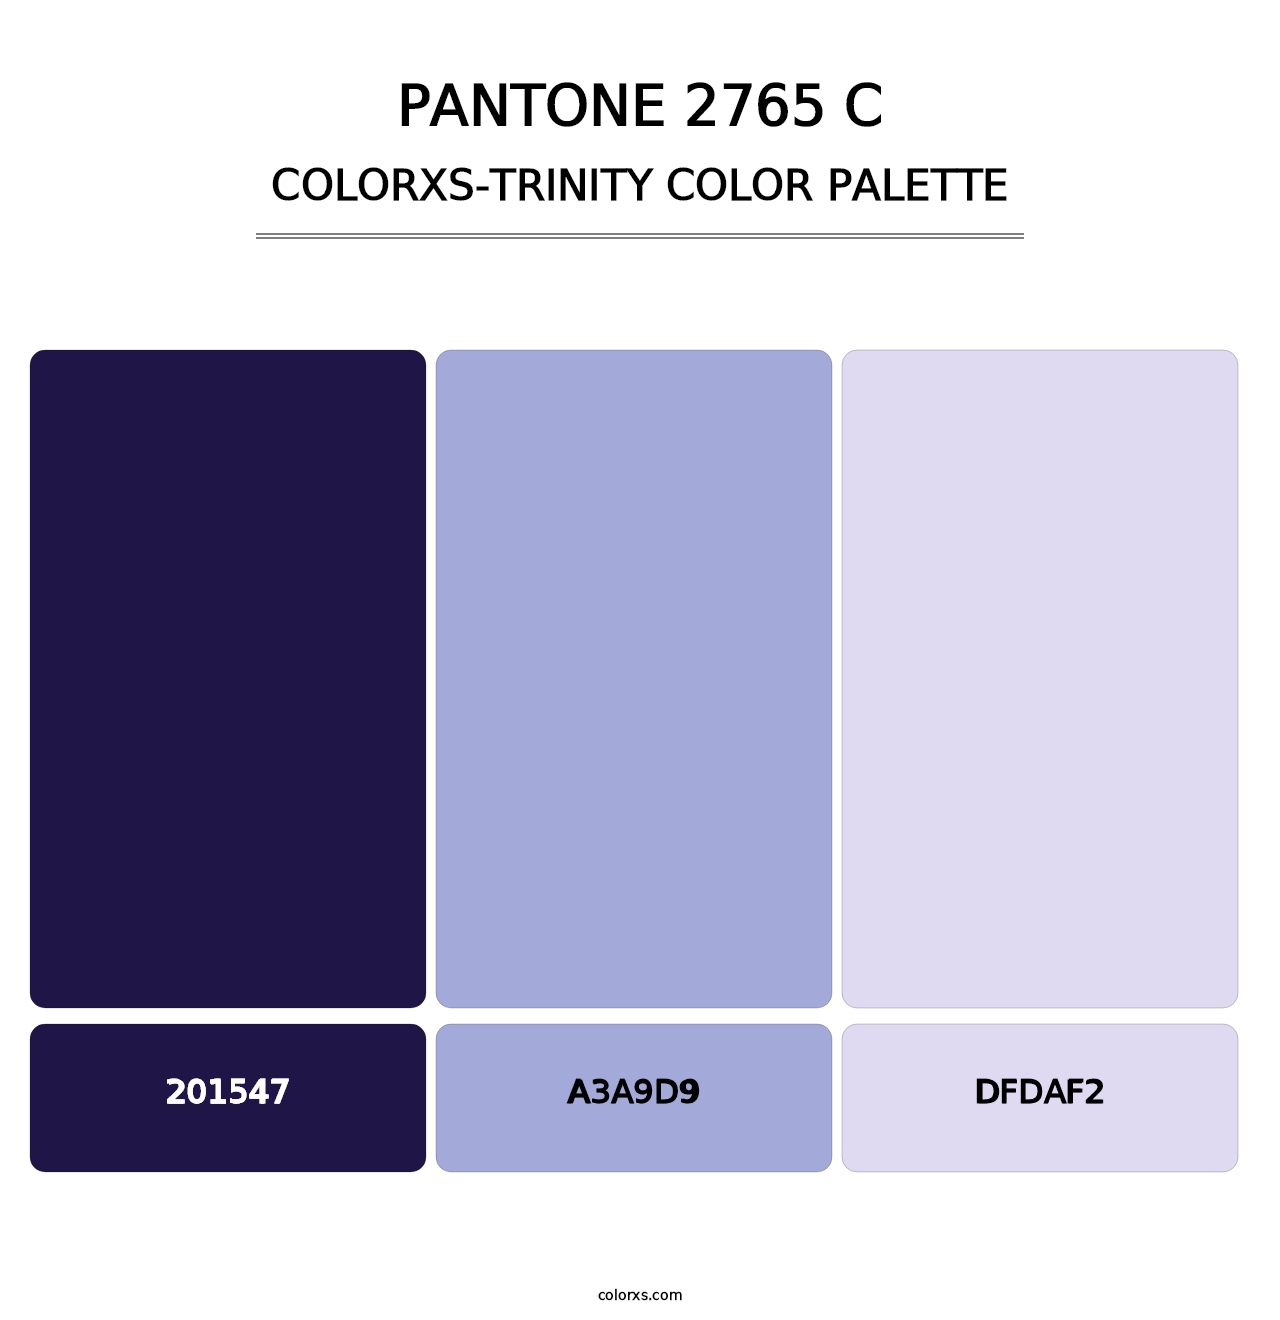 PANTONE 2765 C - Colorxs Trinity Palette